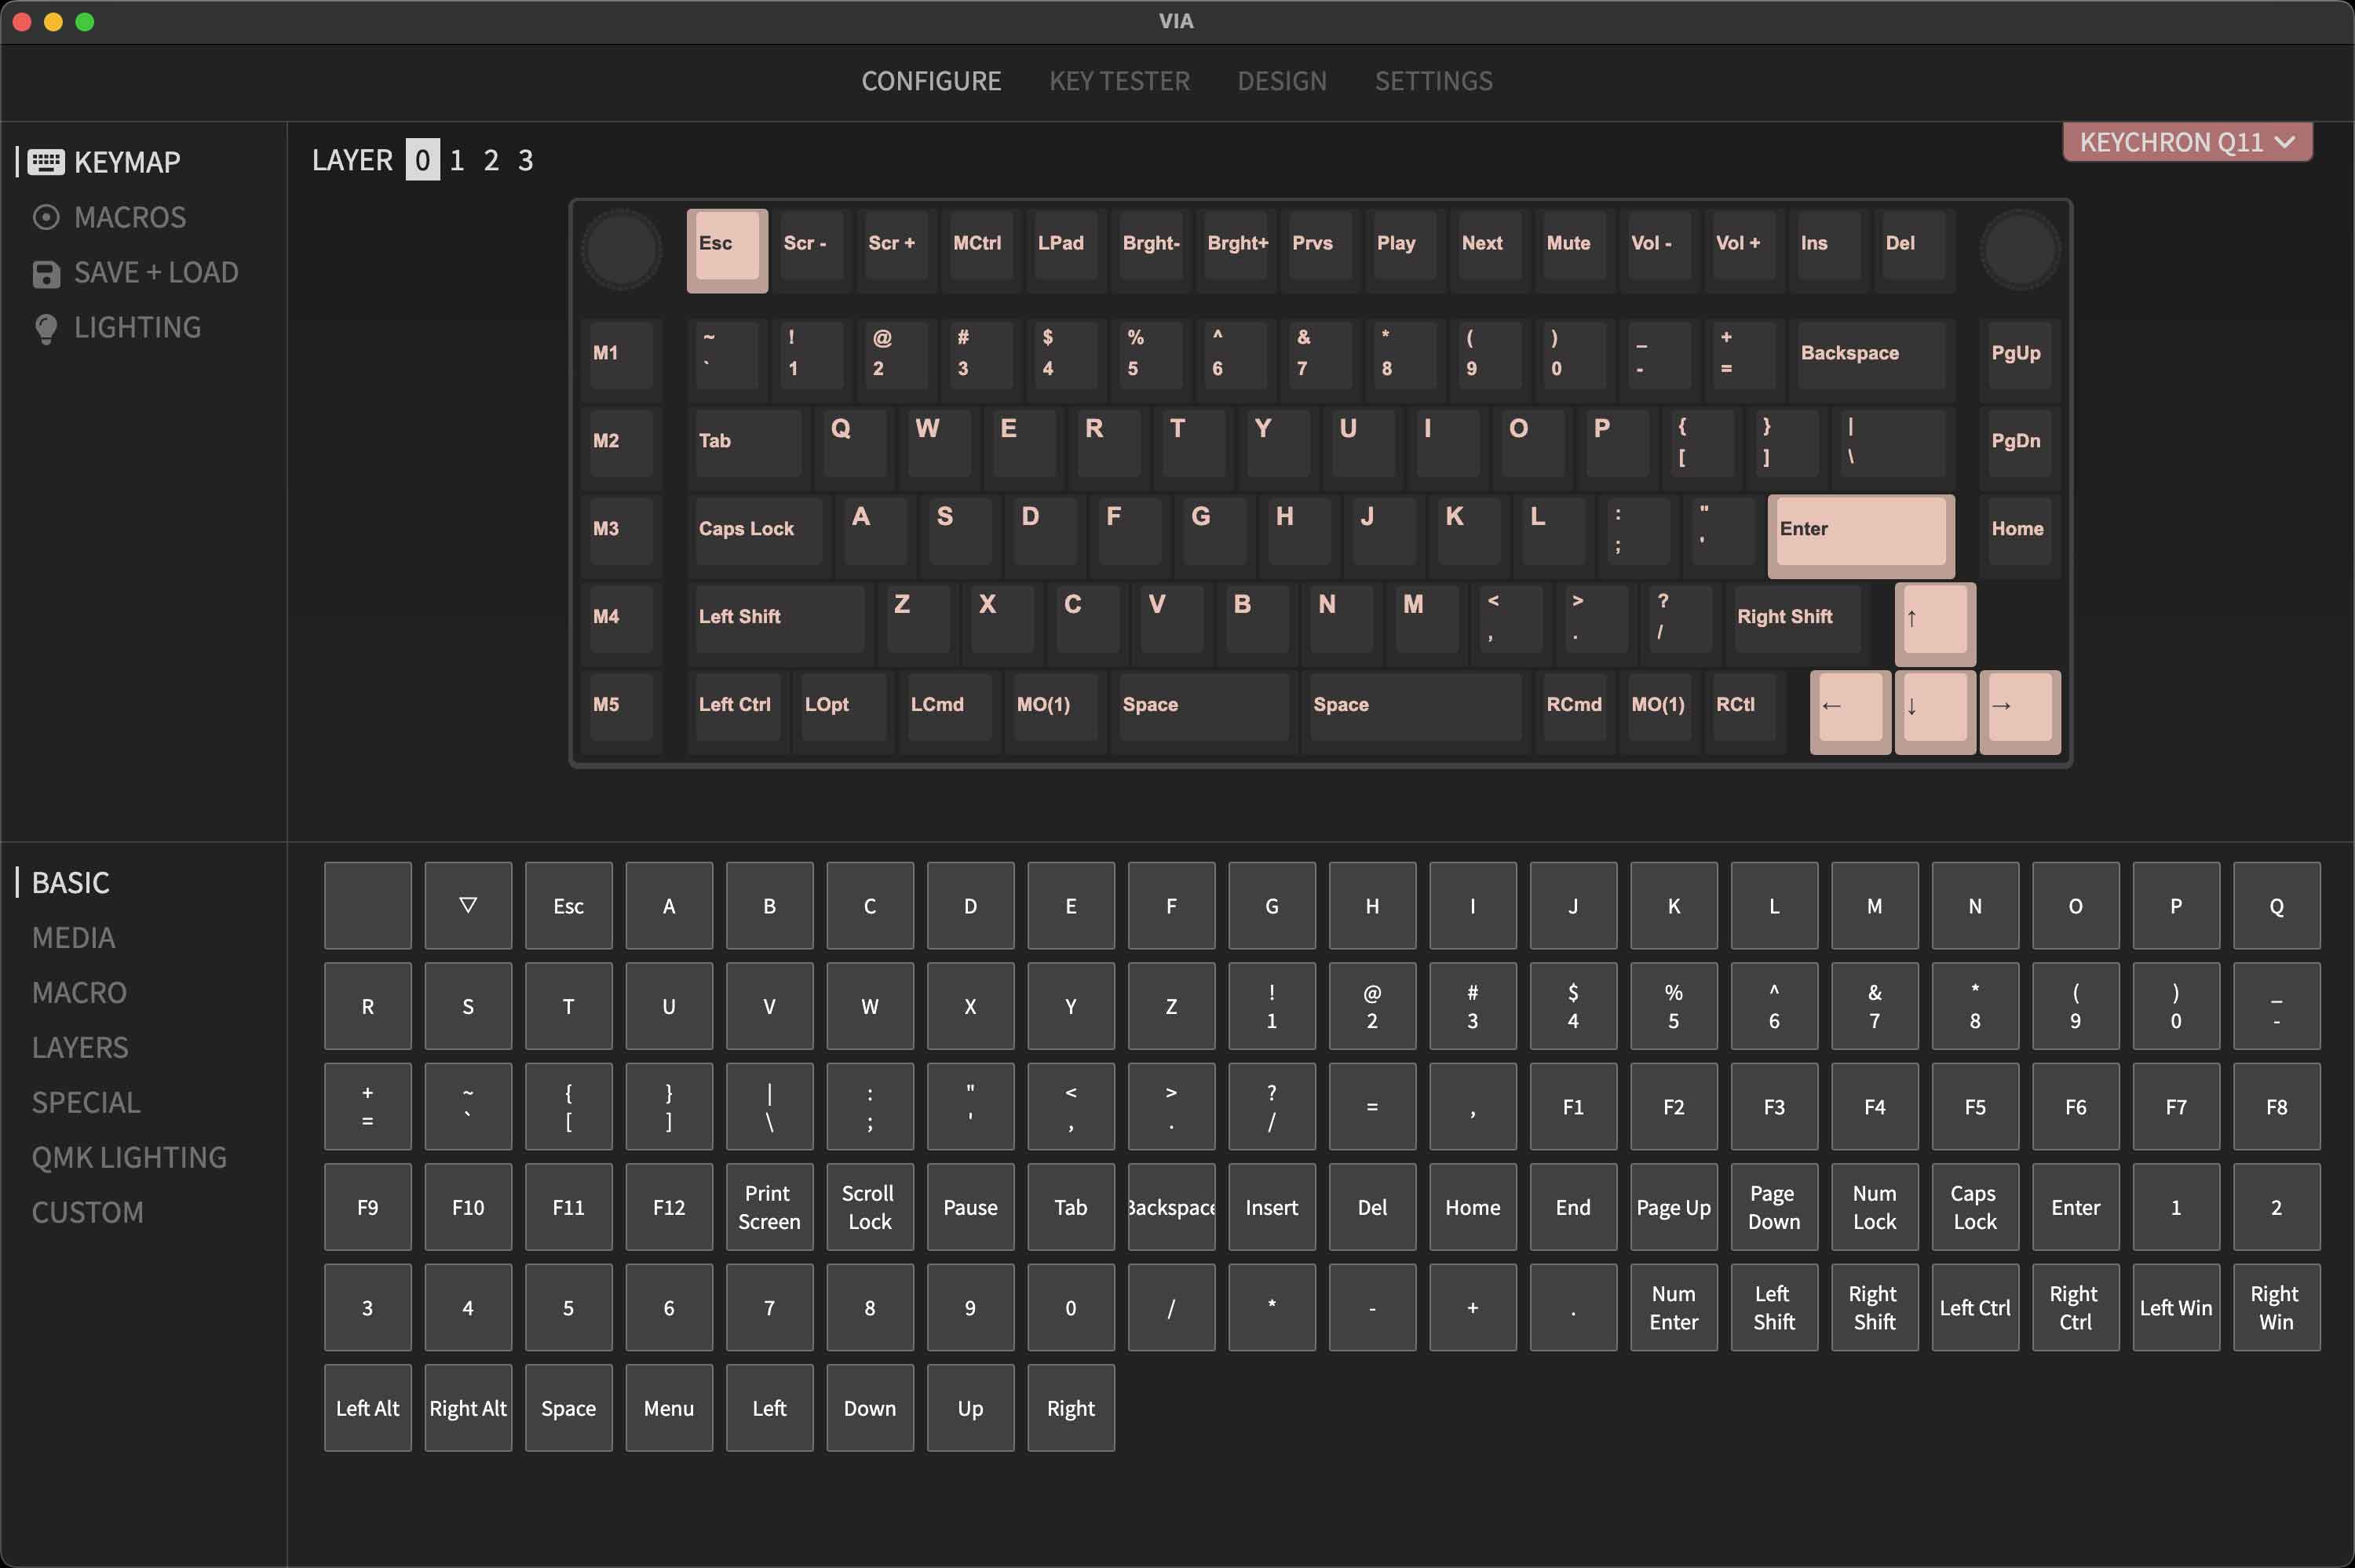 QMK VIA screen capture of Rotary encoder function of Keychron Q11 75% Layout Split Custom Mechanical Keyboard